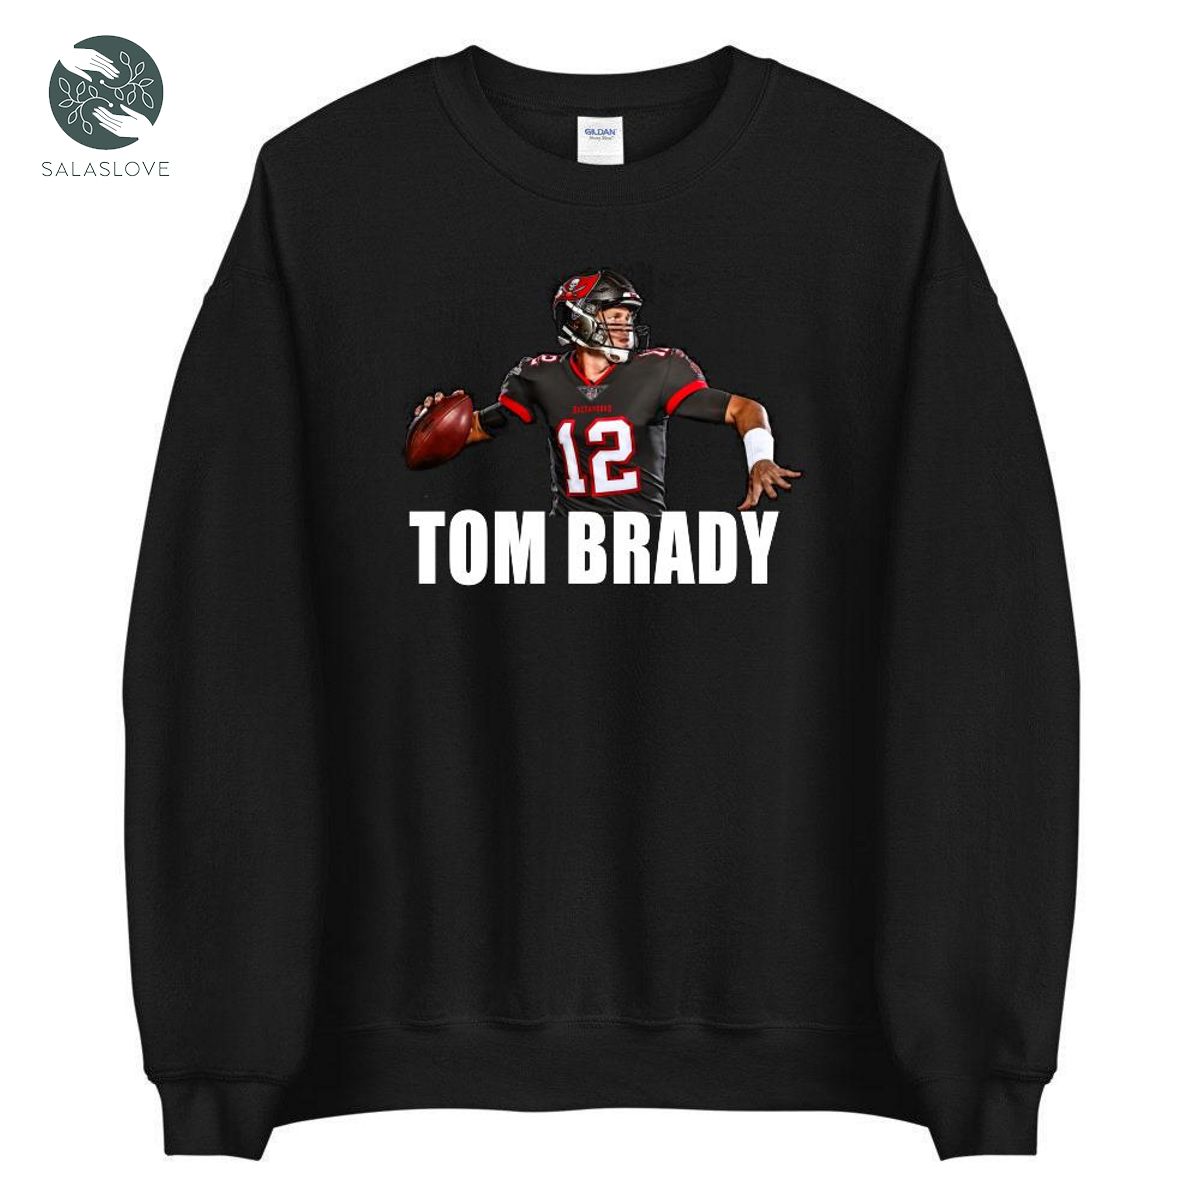 Tom Brady Vintage 90s Bootleg Shirt Gift for Football Fan